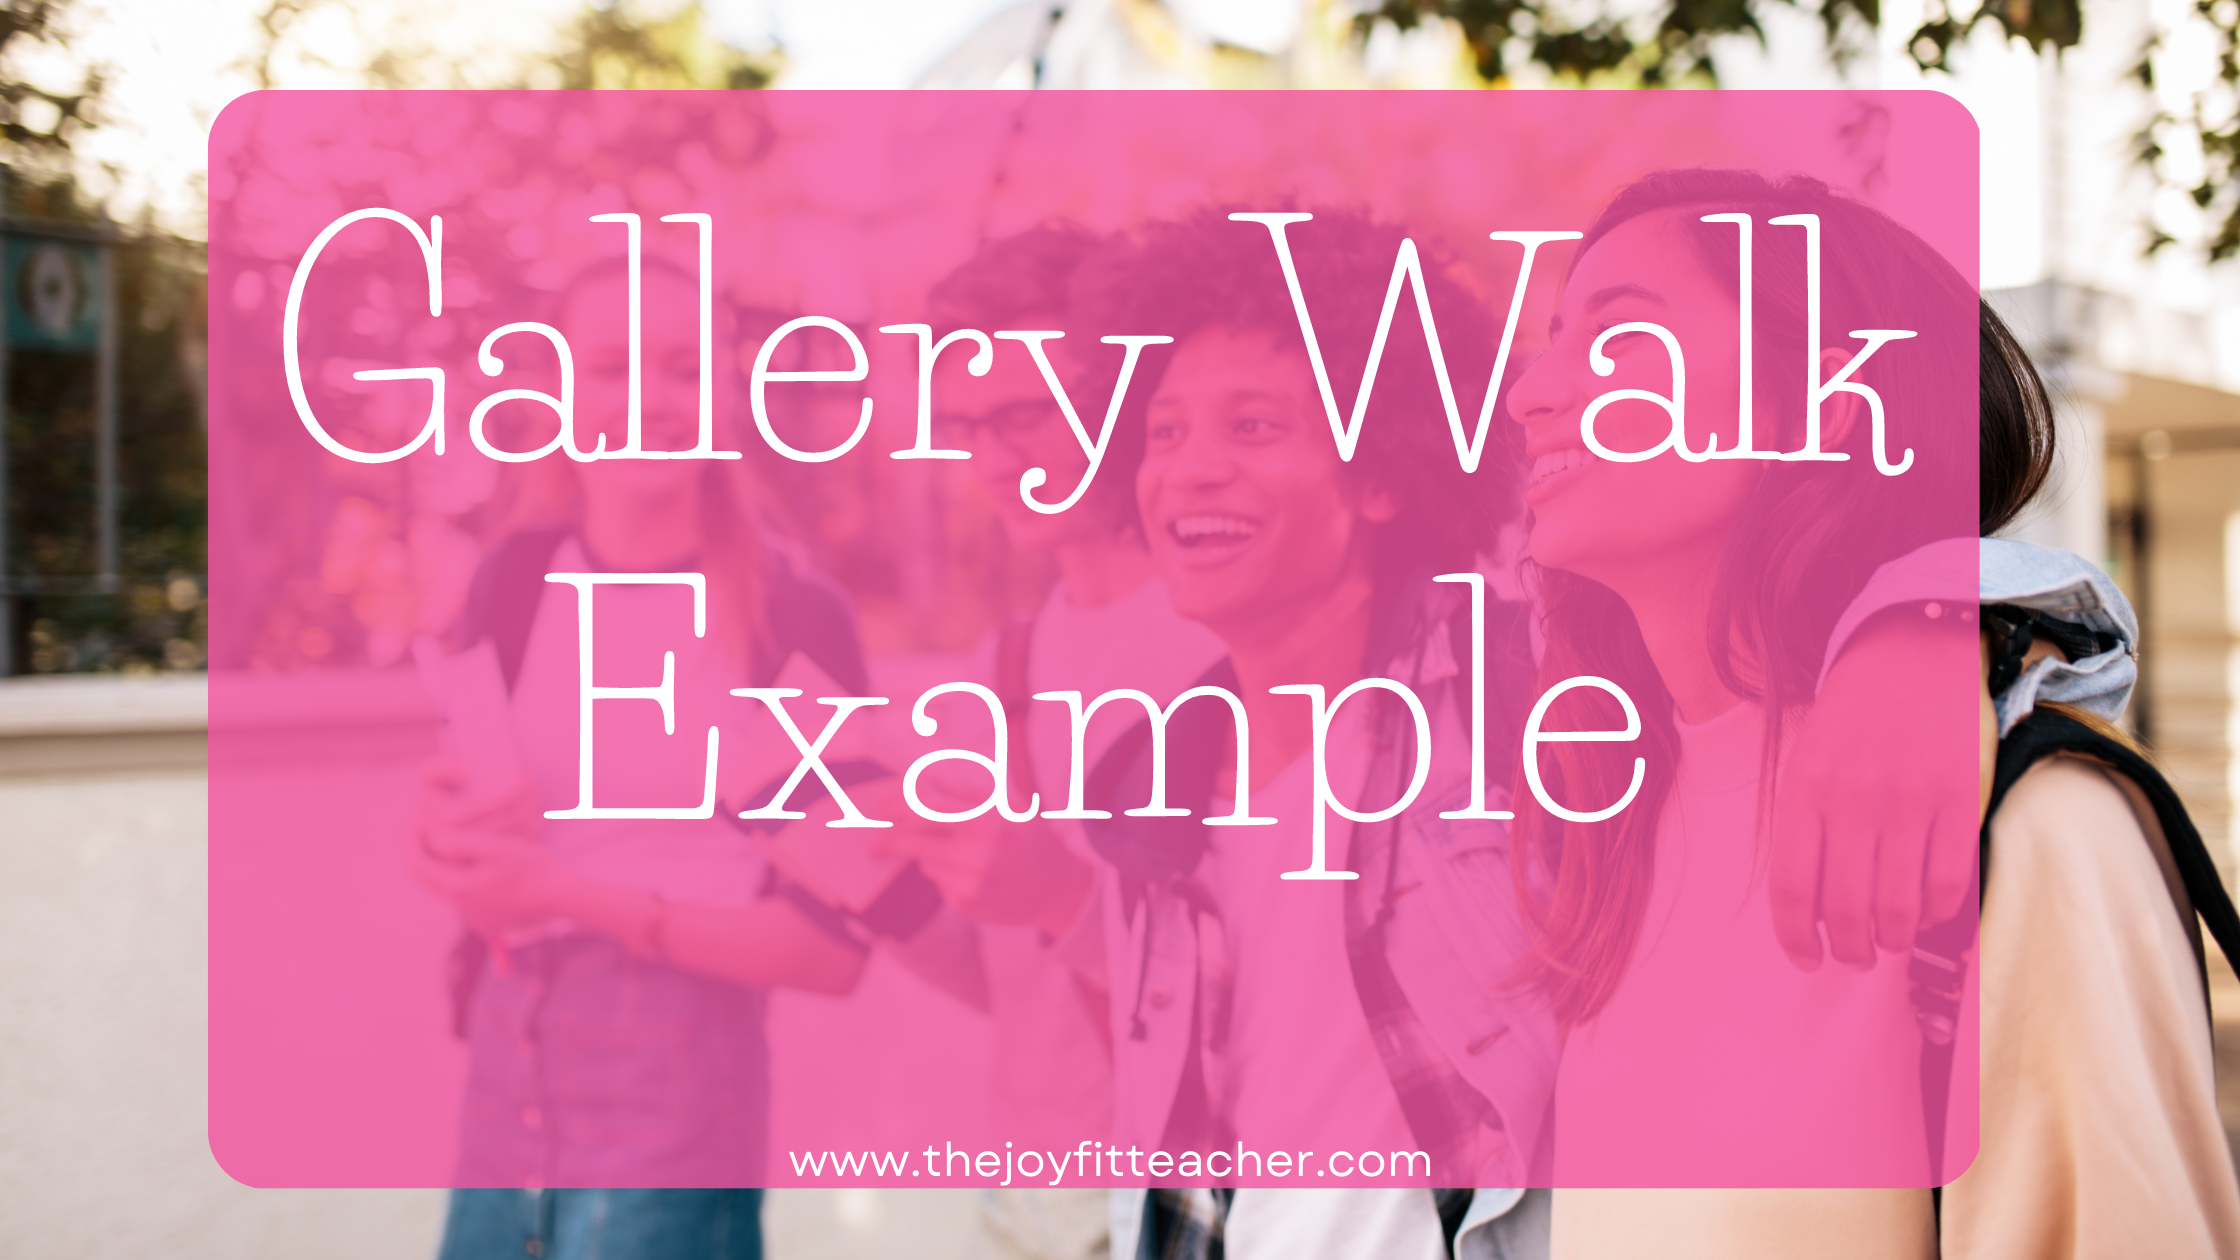 Gallery Walk Example